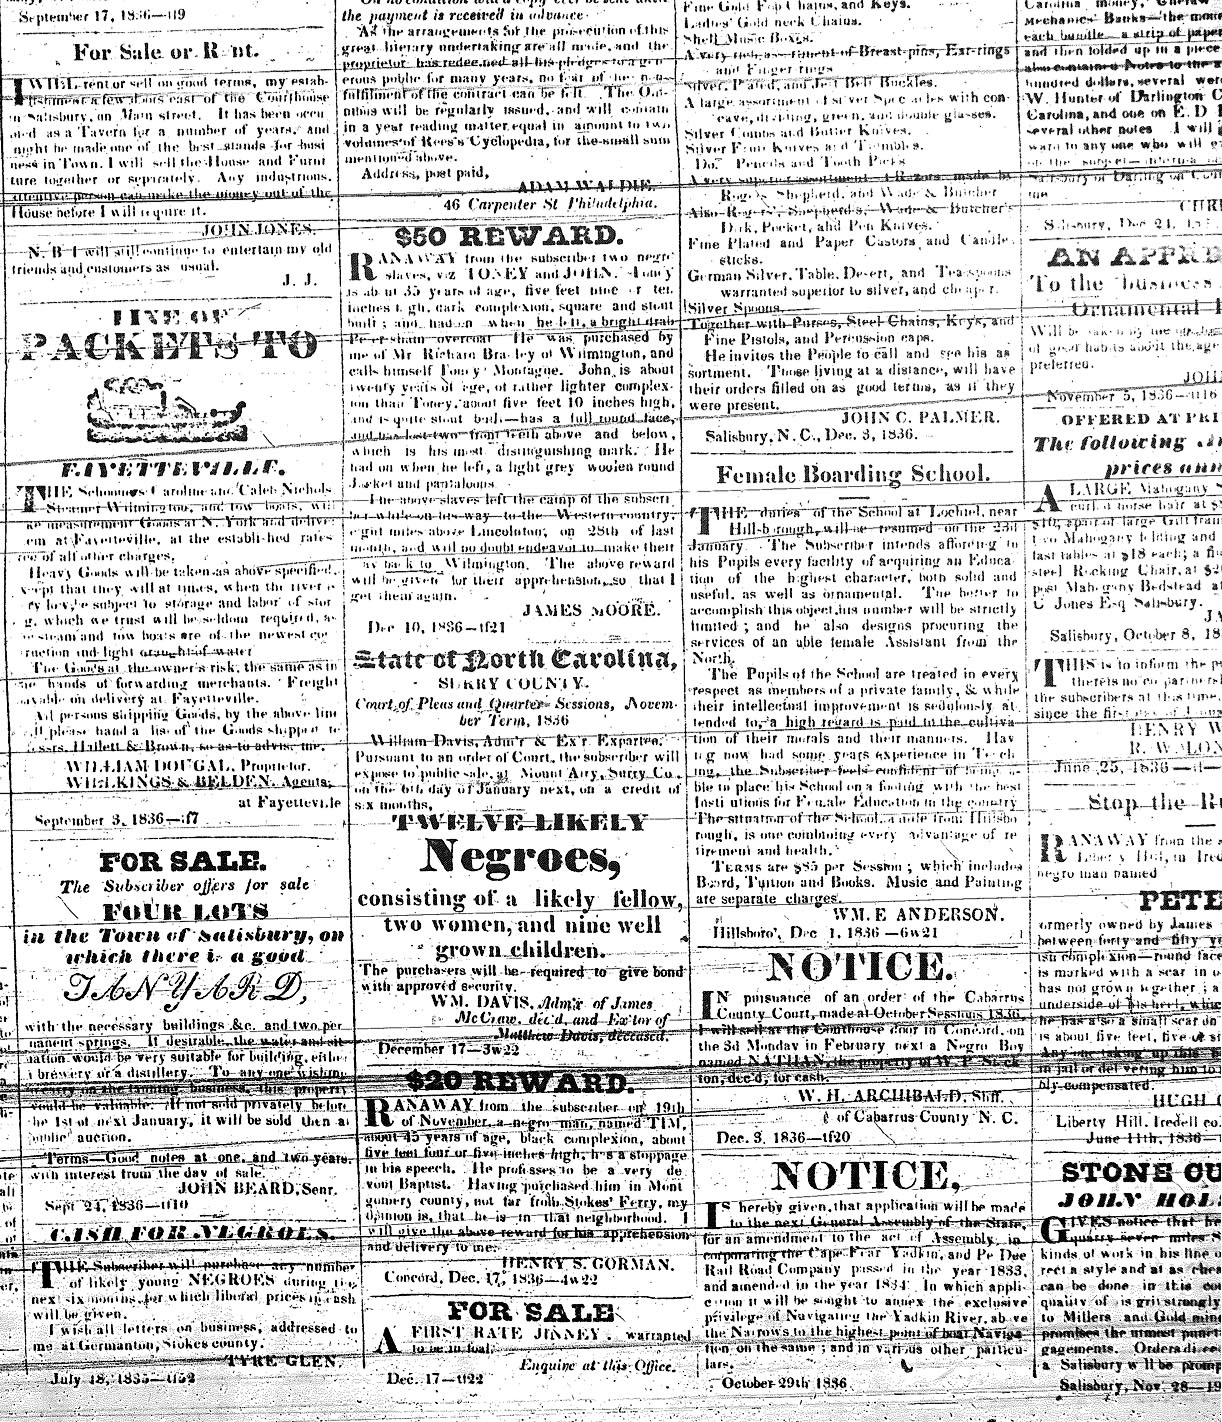 Image of Carolina Watchman ads from January 7, 1837